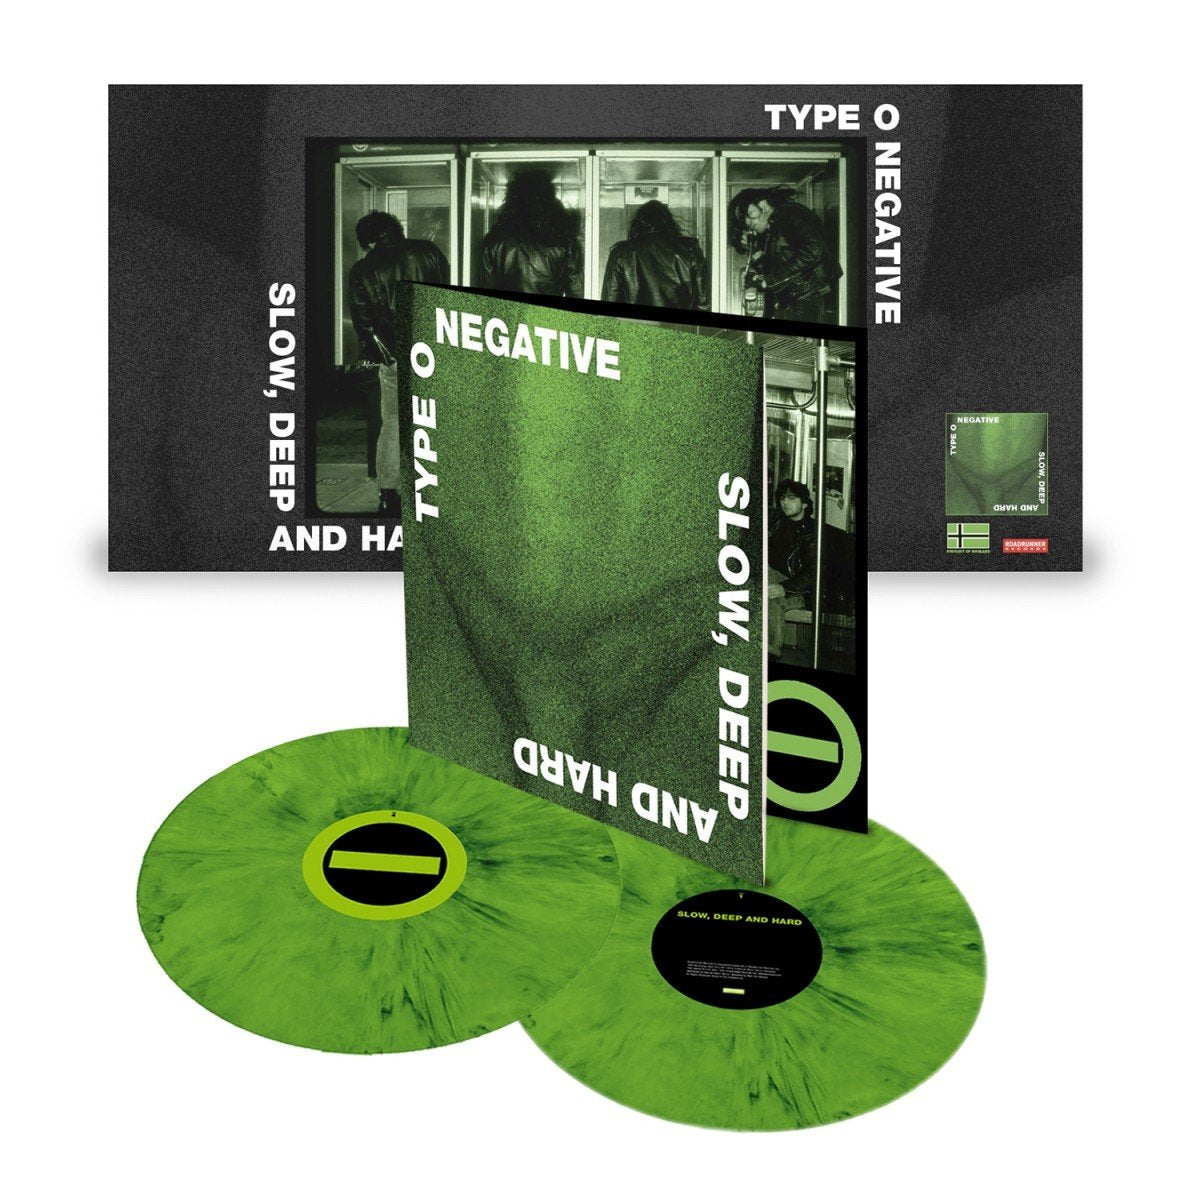 Type O Negative "Slow, Deep And Hard" 2XLP (COLOR Vinyl)